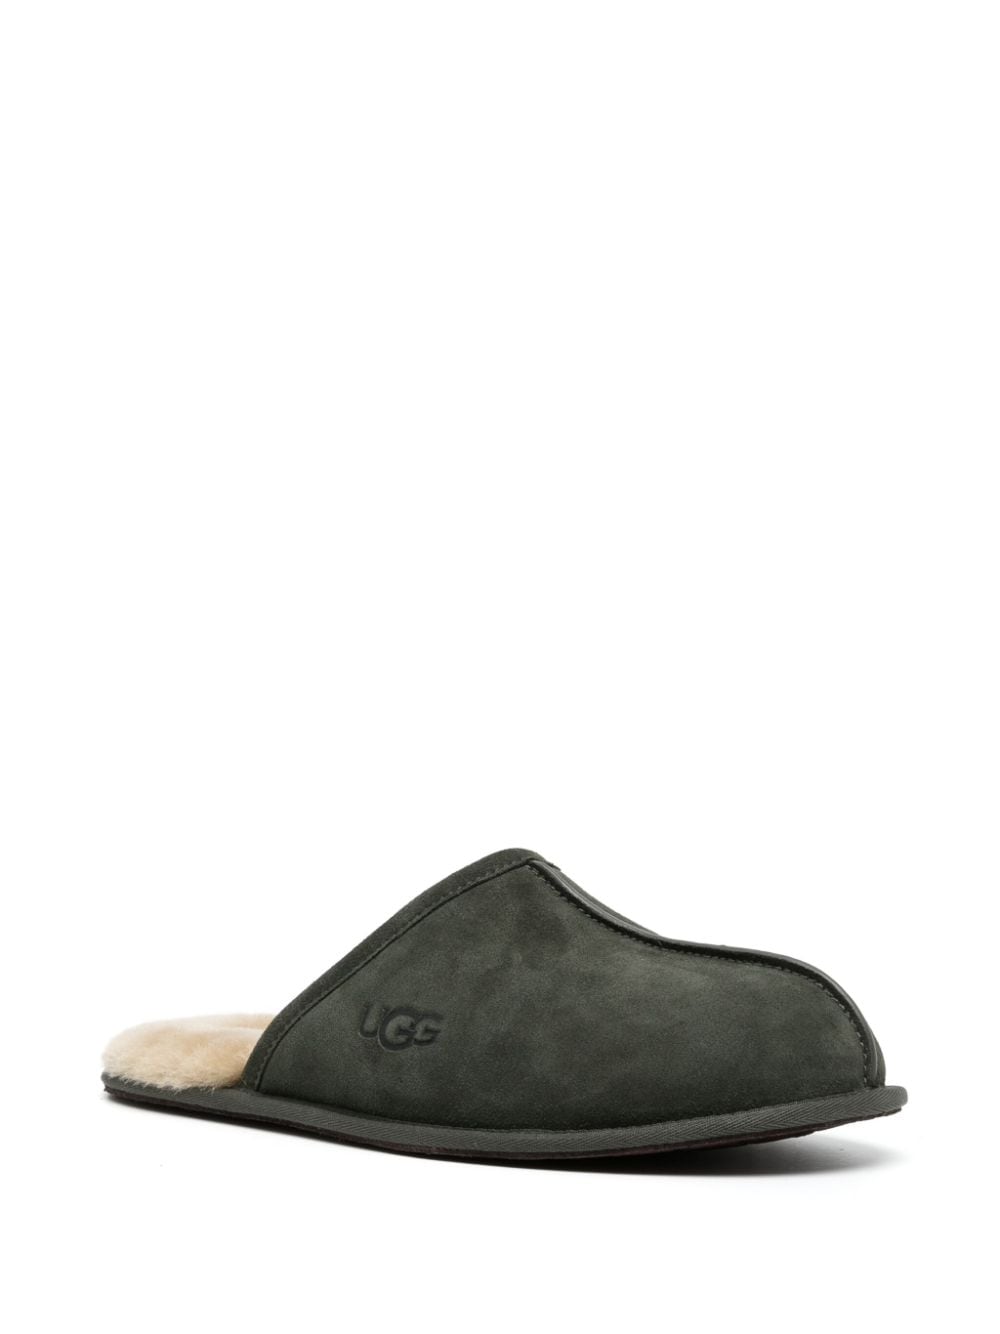 UGG Scuff sheepskin slippers - Groen